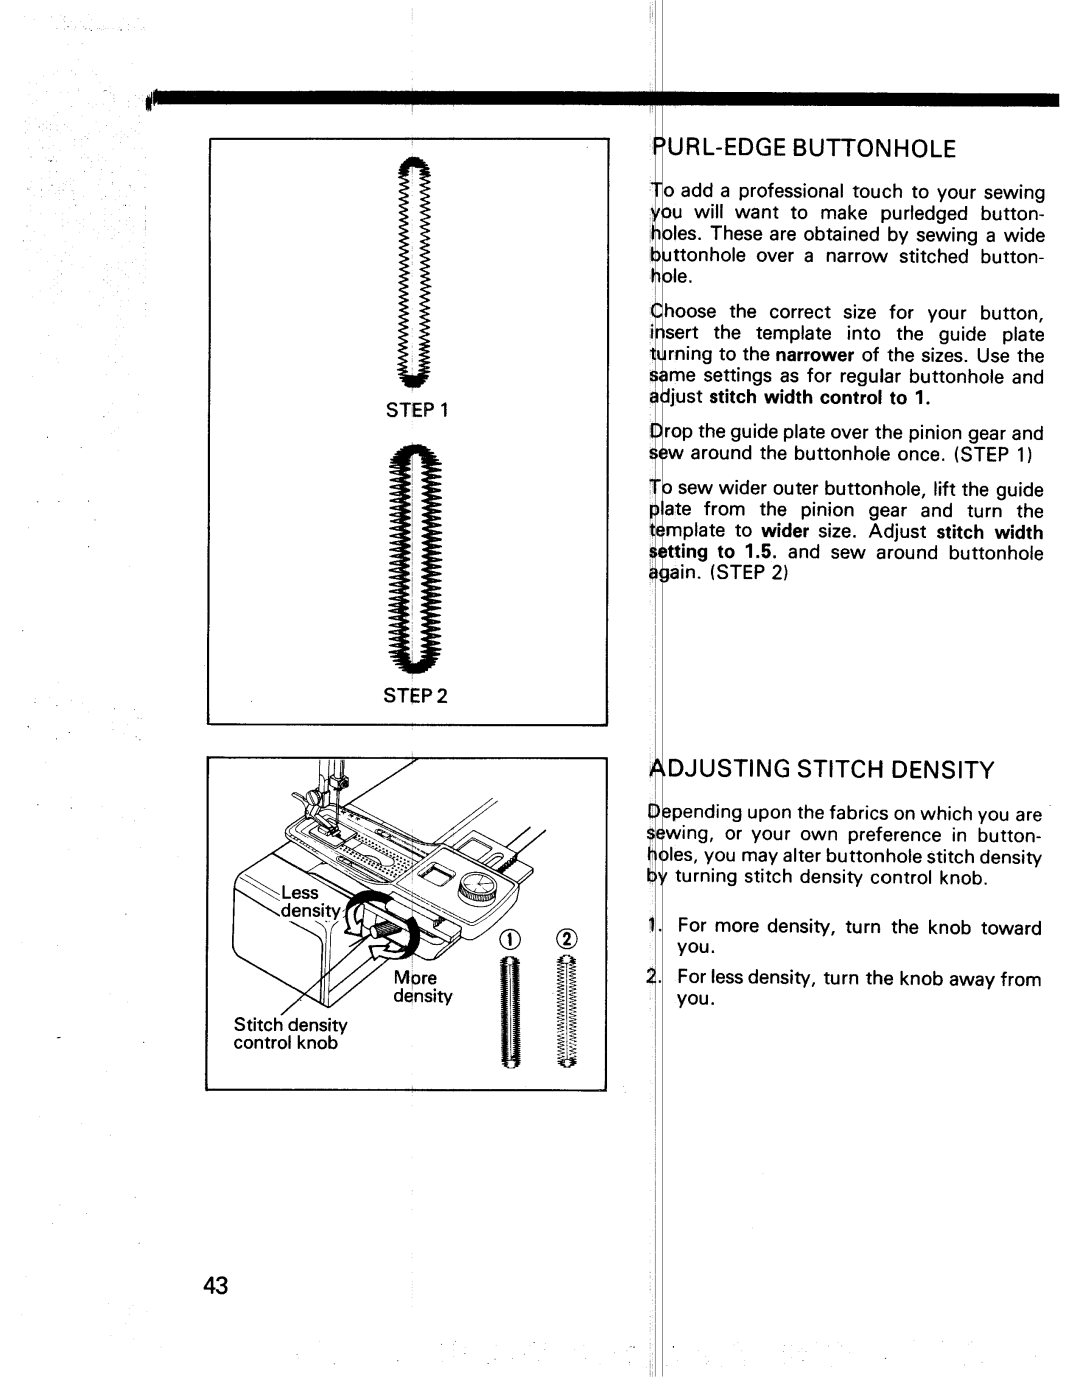 Kenmore 17920, 17922 manual Url-Edge Buttonhole, Djusting Stitch Density, stitch width control to 